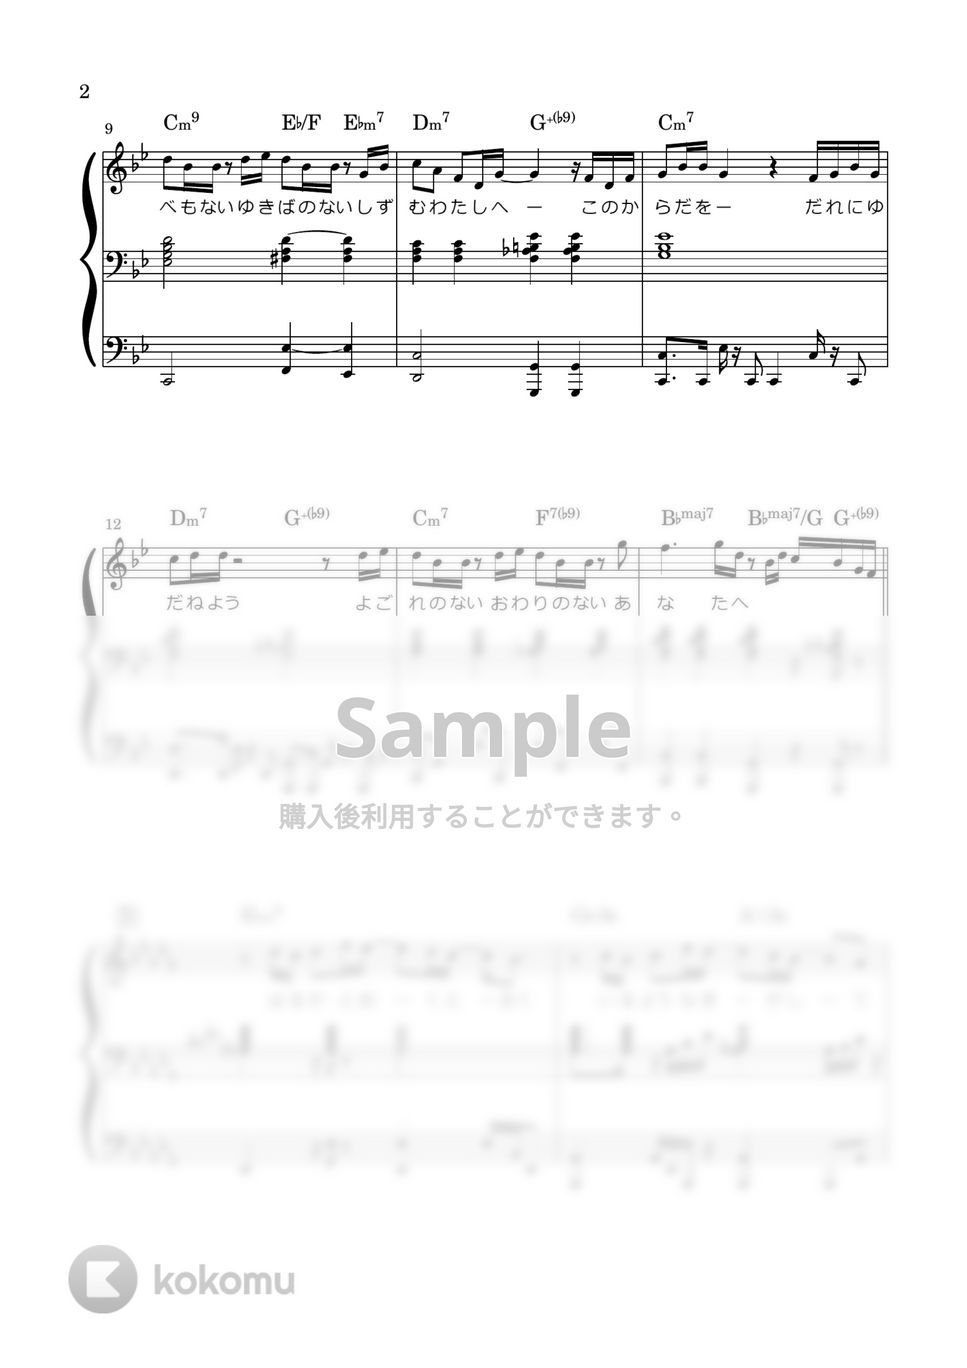 MISIA - Higher Love (藤井風ねそべり紅白 弾き語り) by miiの楽譜棚